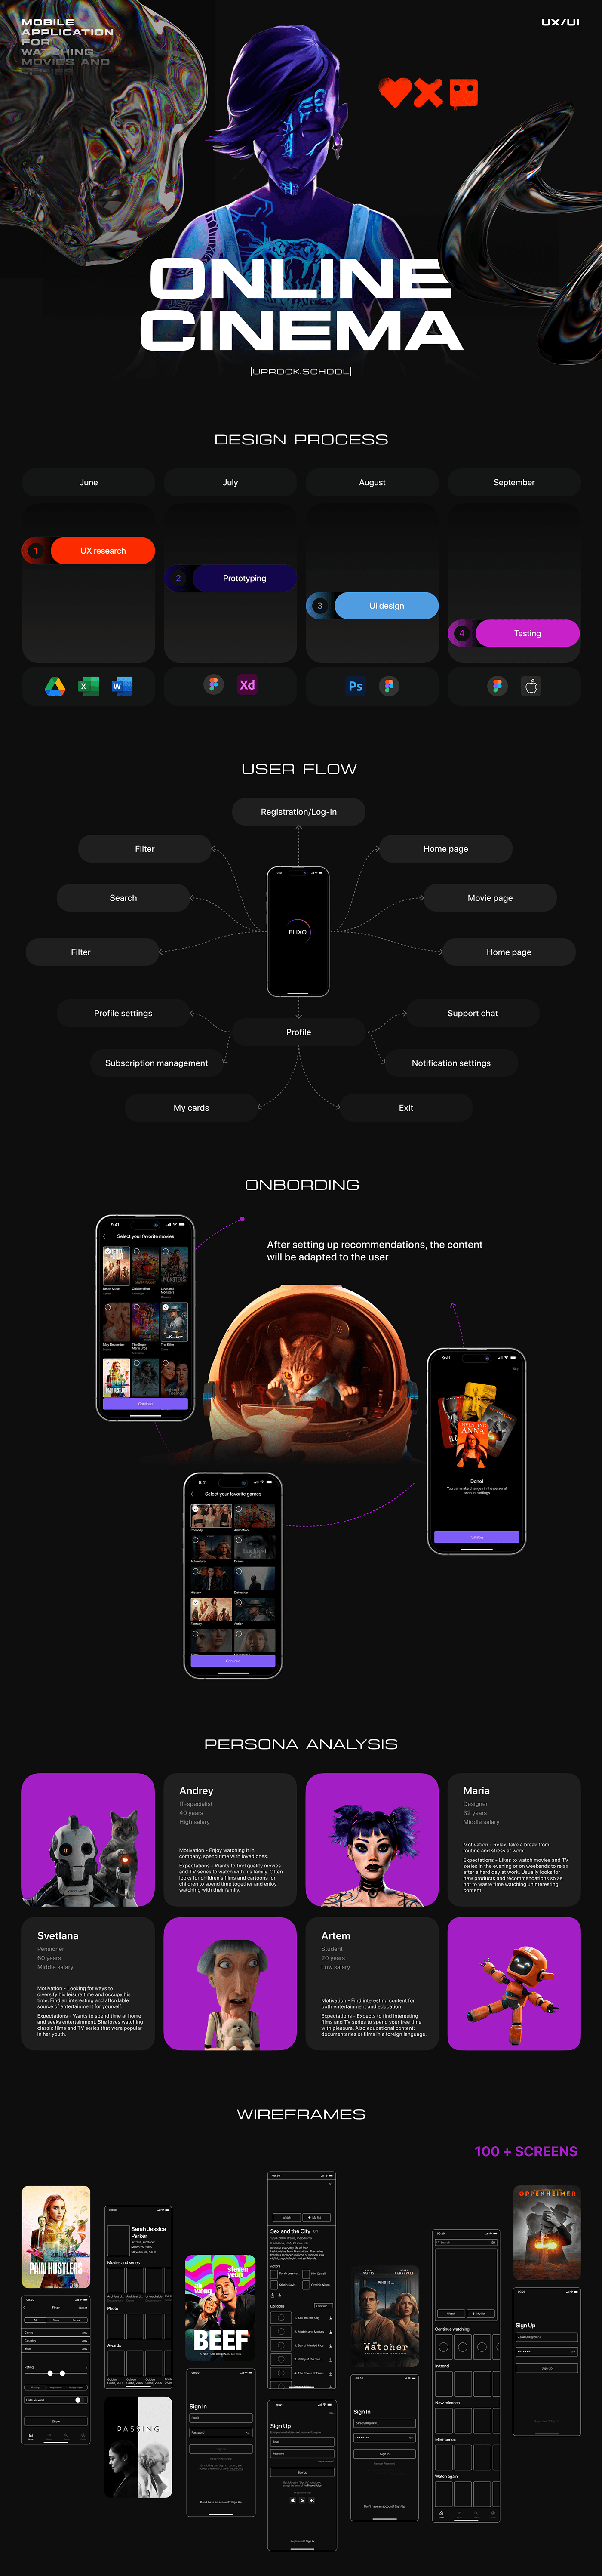 ux UI/UX ui design Mobile app user experience user interface ios mobile app design application online cinema